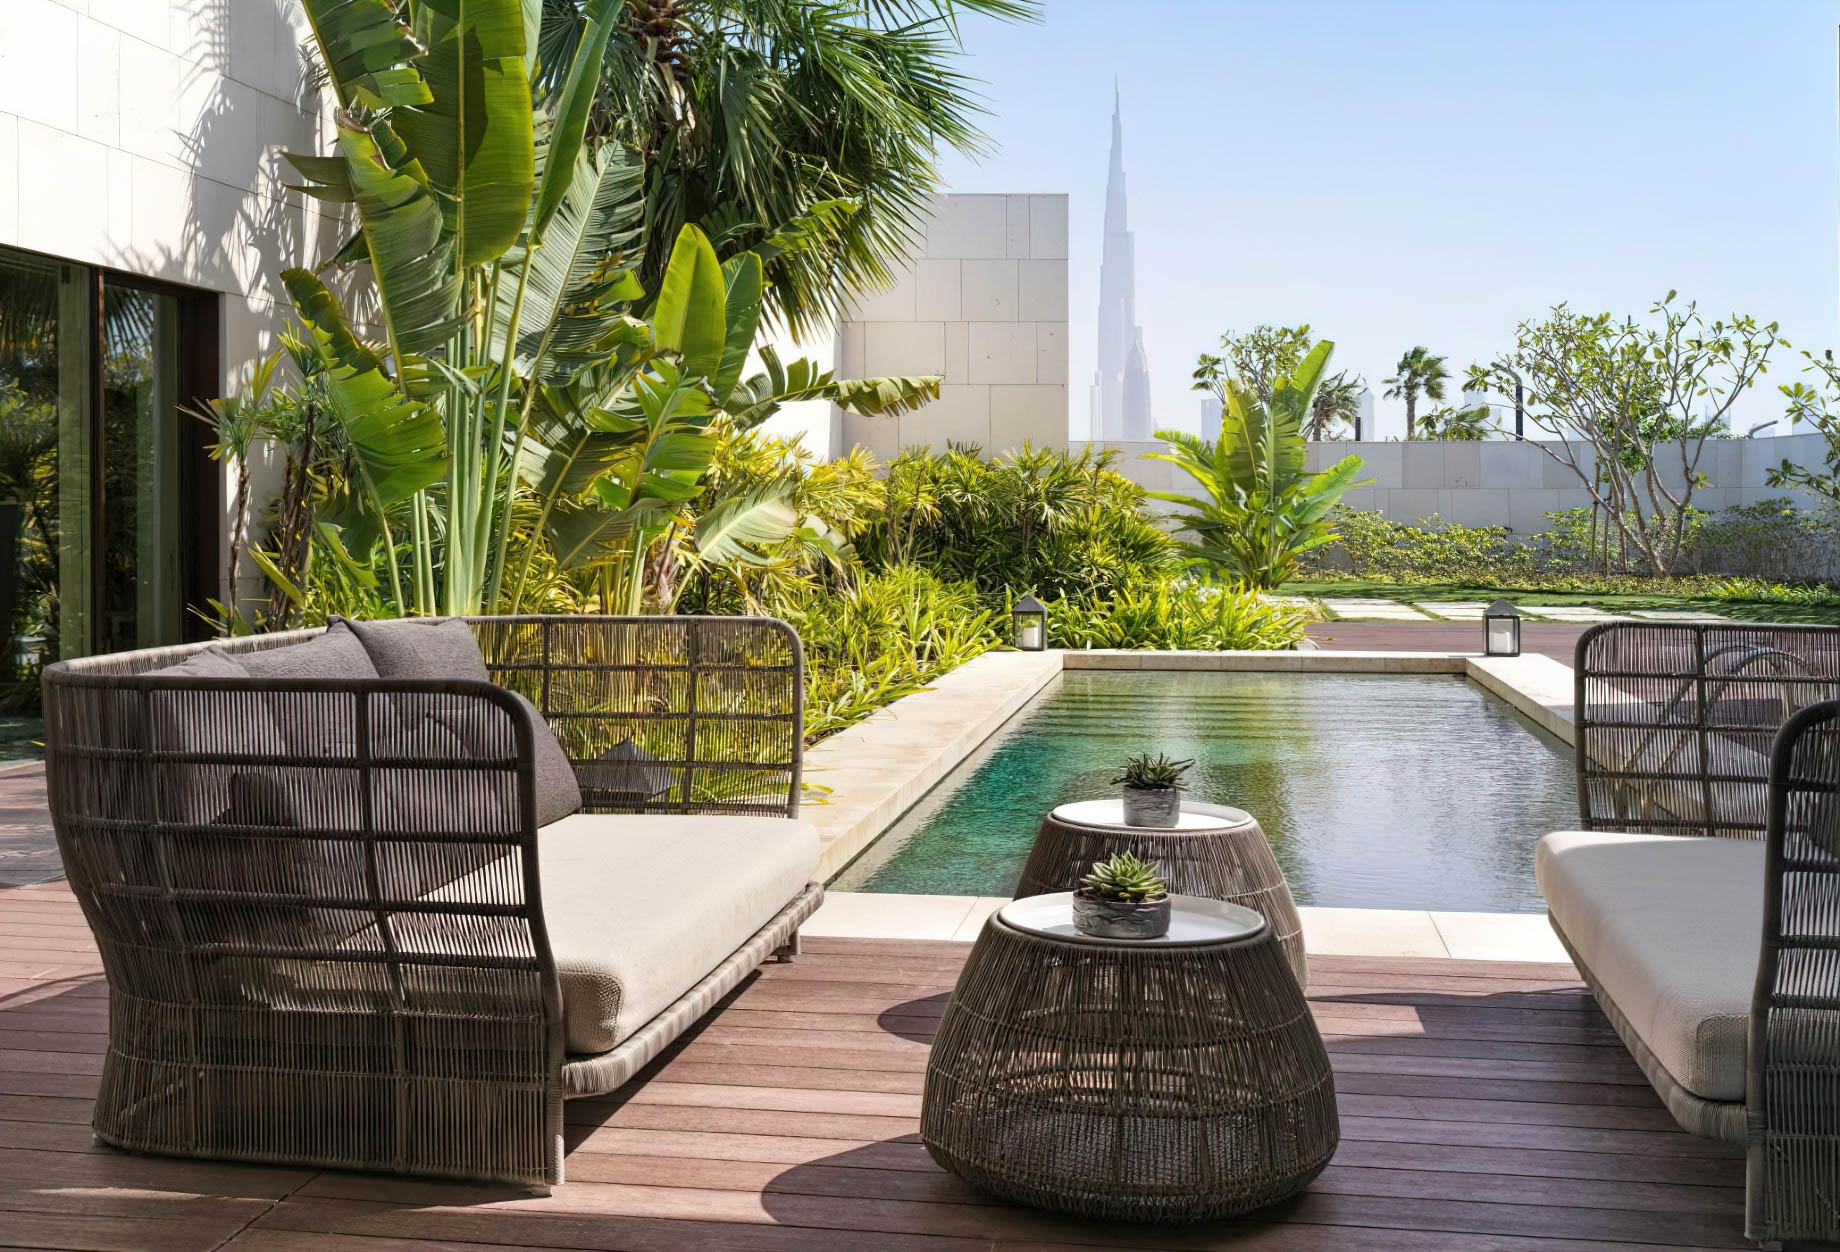 Bvlgari Resort Dubai – Jumeira Bay Island, Dubai, UAE – Exterior Pool Deck Terrace